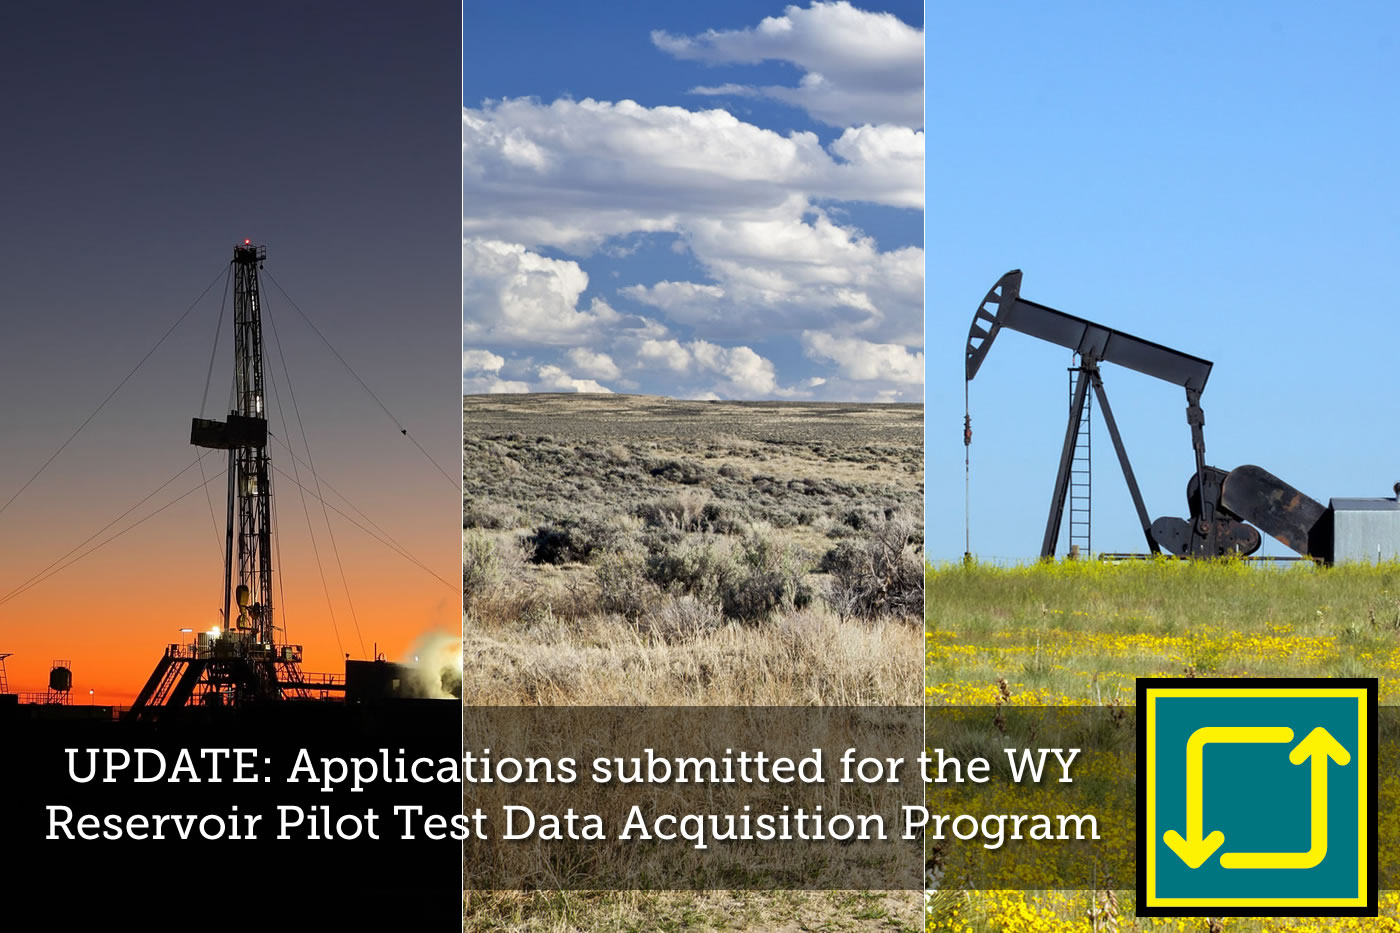 Request for Proposals (RFP) for Wyoming Reservoir Pilot Test Data Acquisition Program